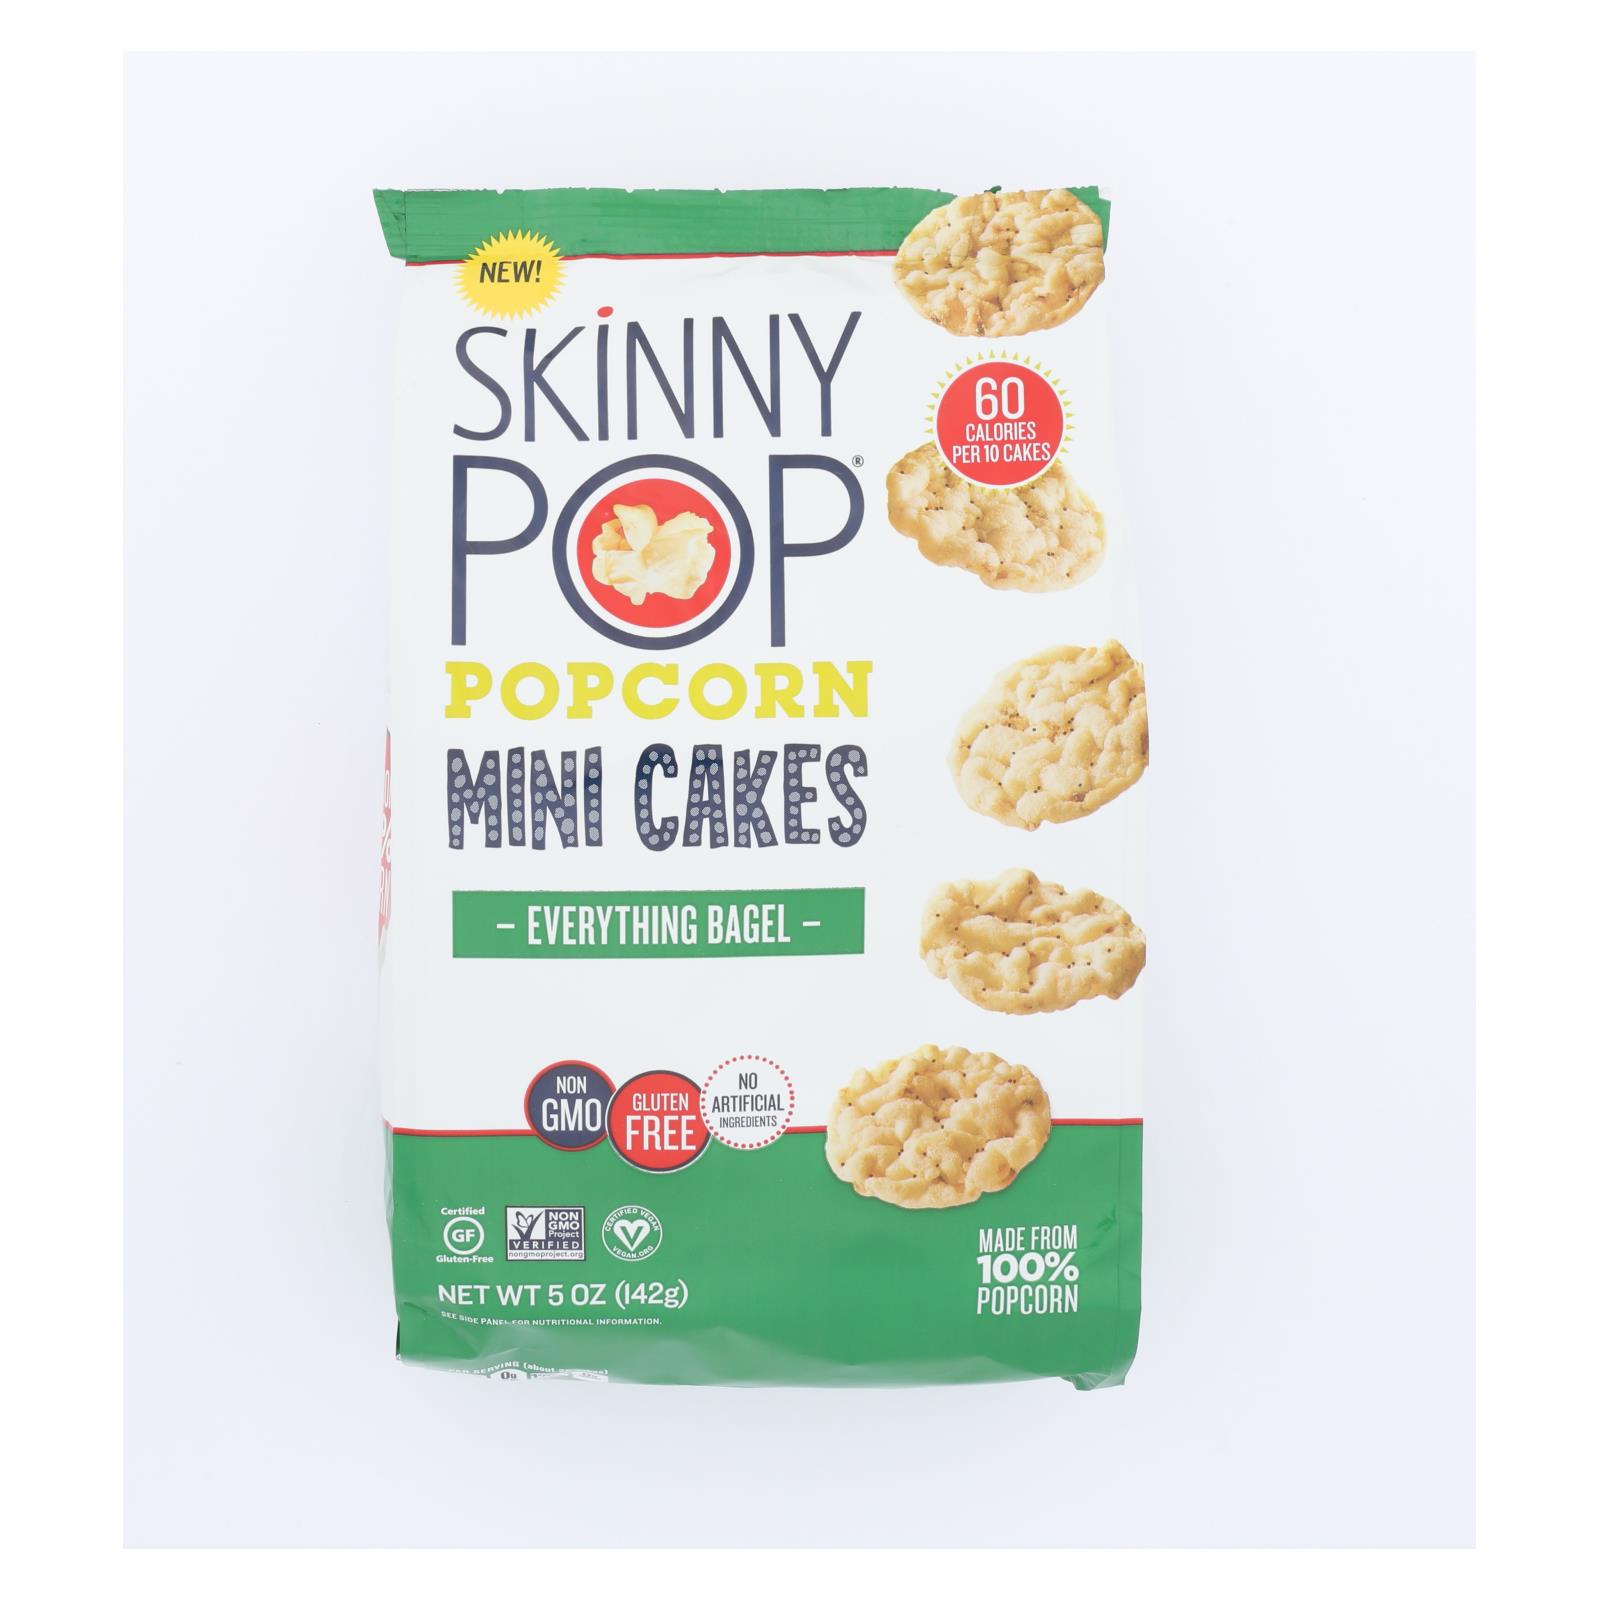 Skinnypop Popcorn - Popcorn Mini Cakes Evryth - 4개 묶음상품 - 5 OZ